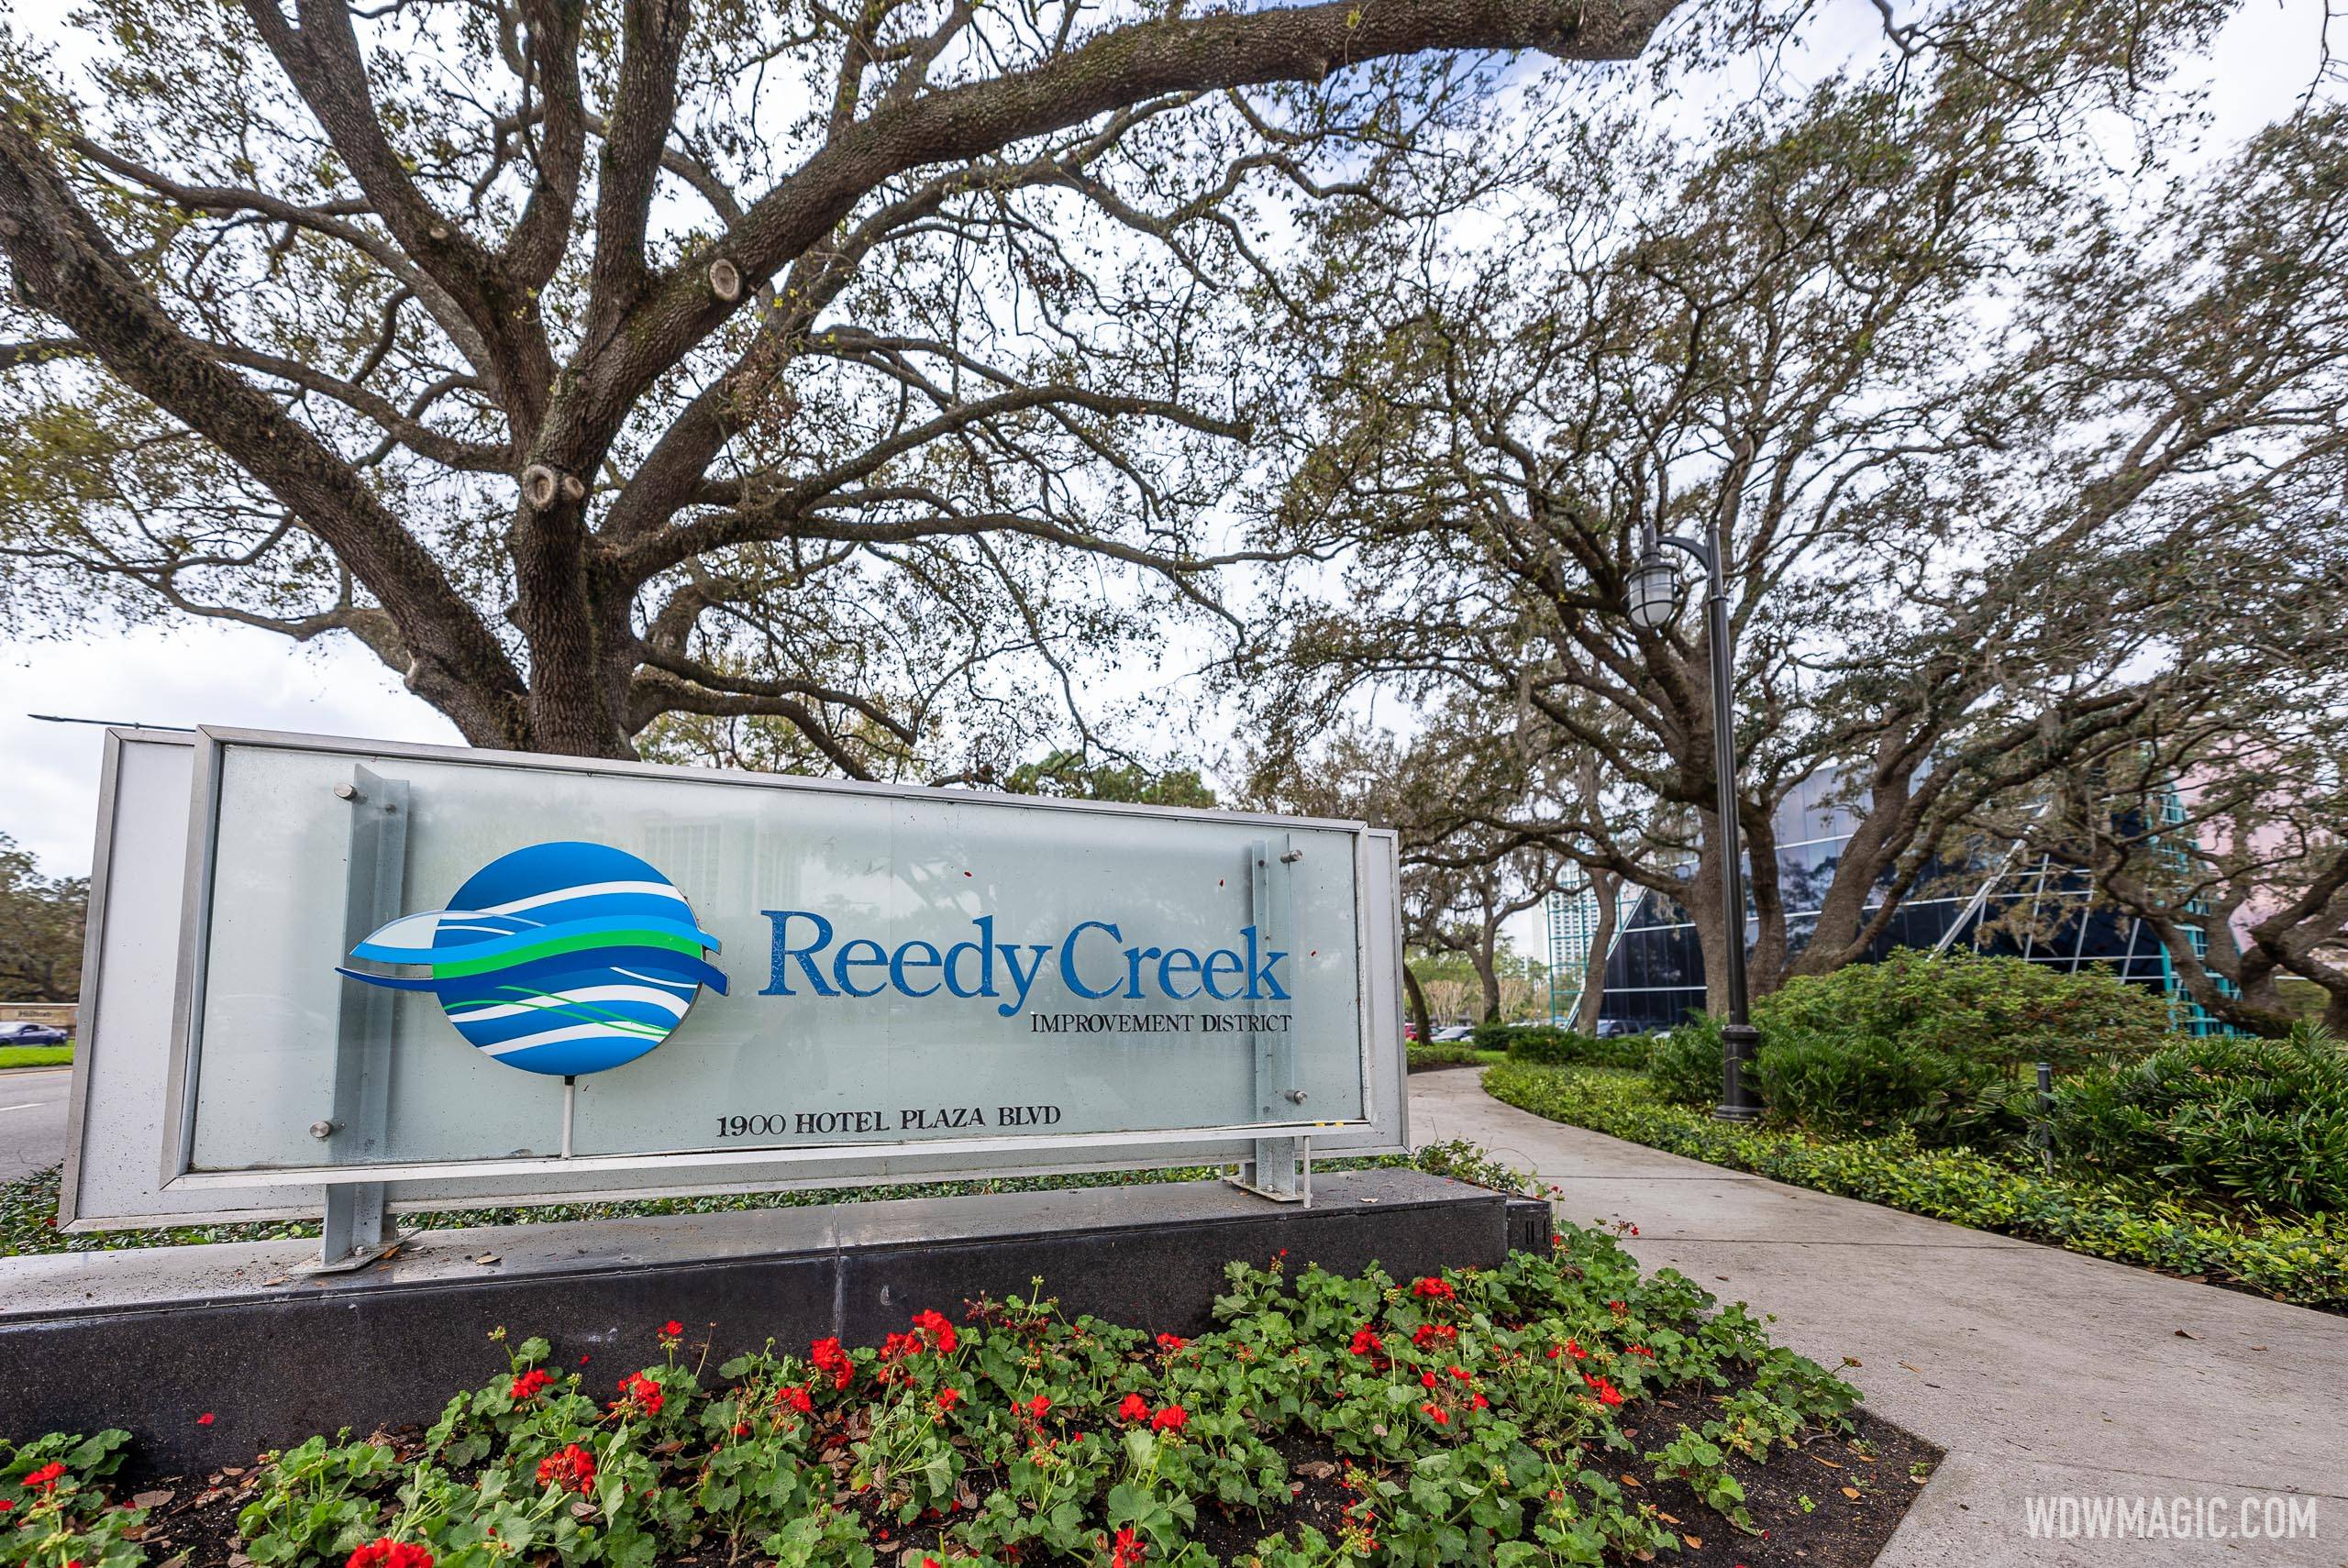 The Reedy Creek HQ near Disney Springs